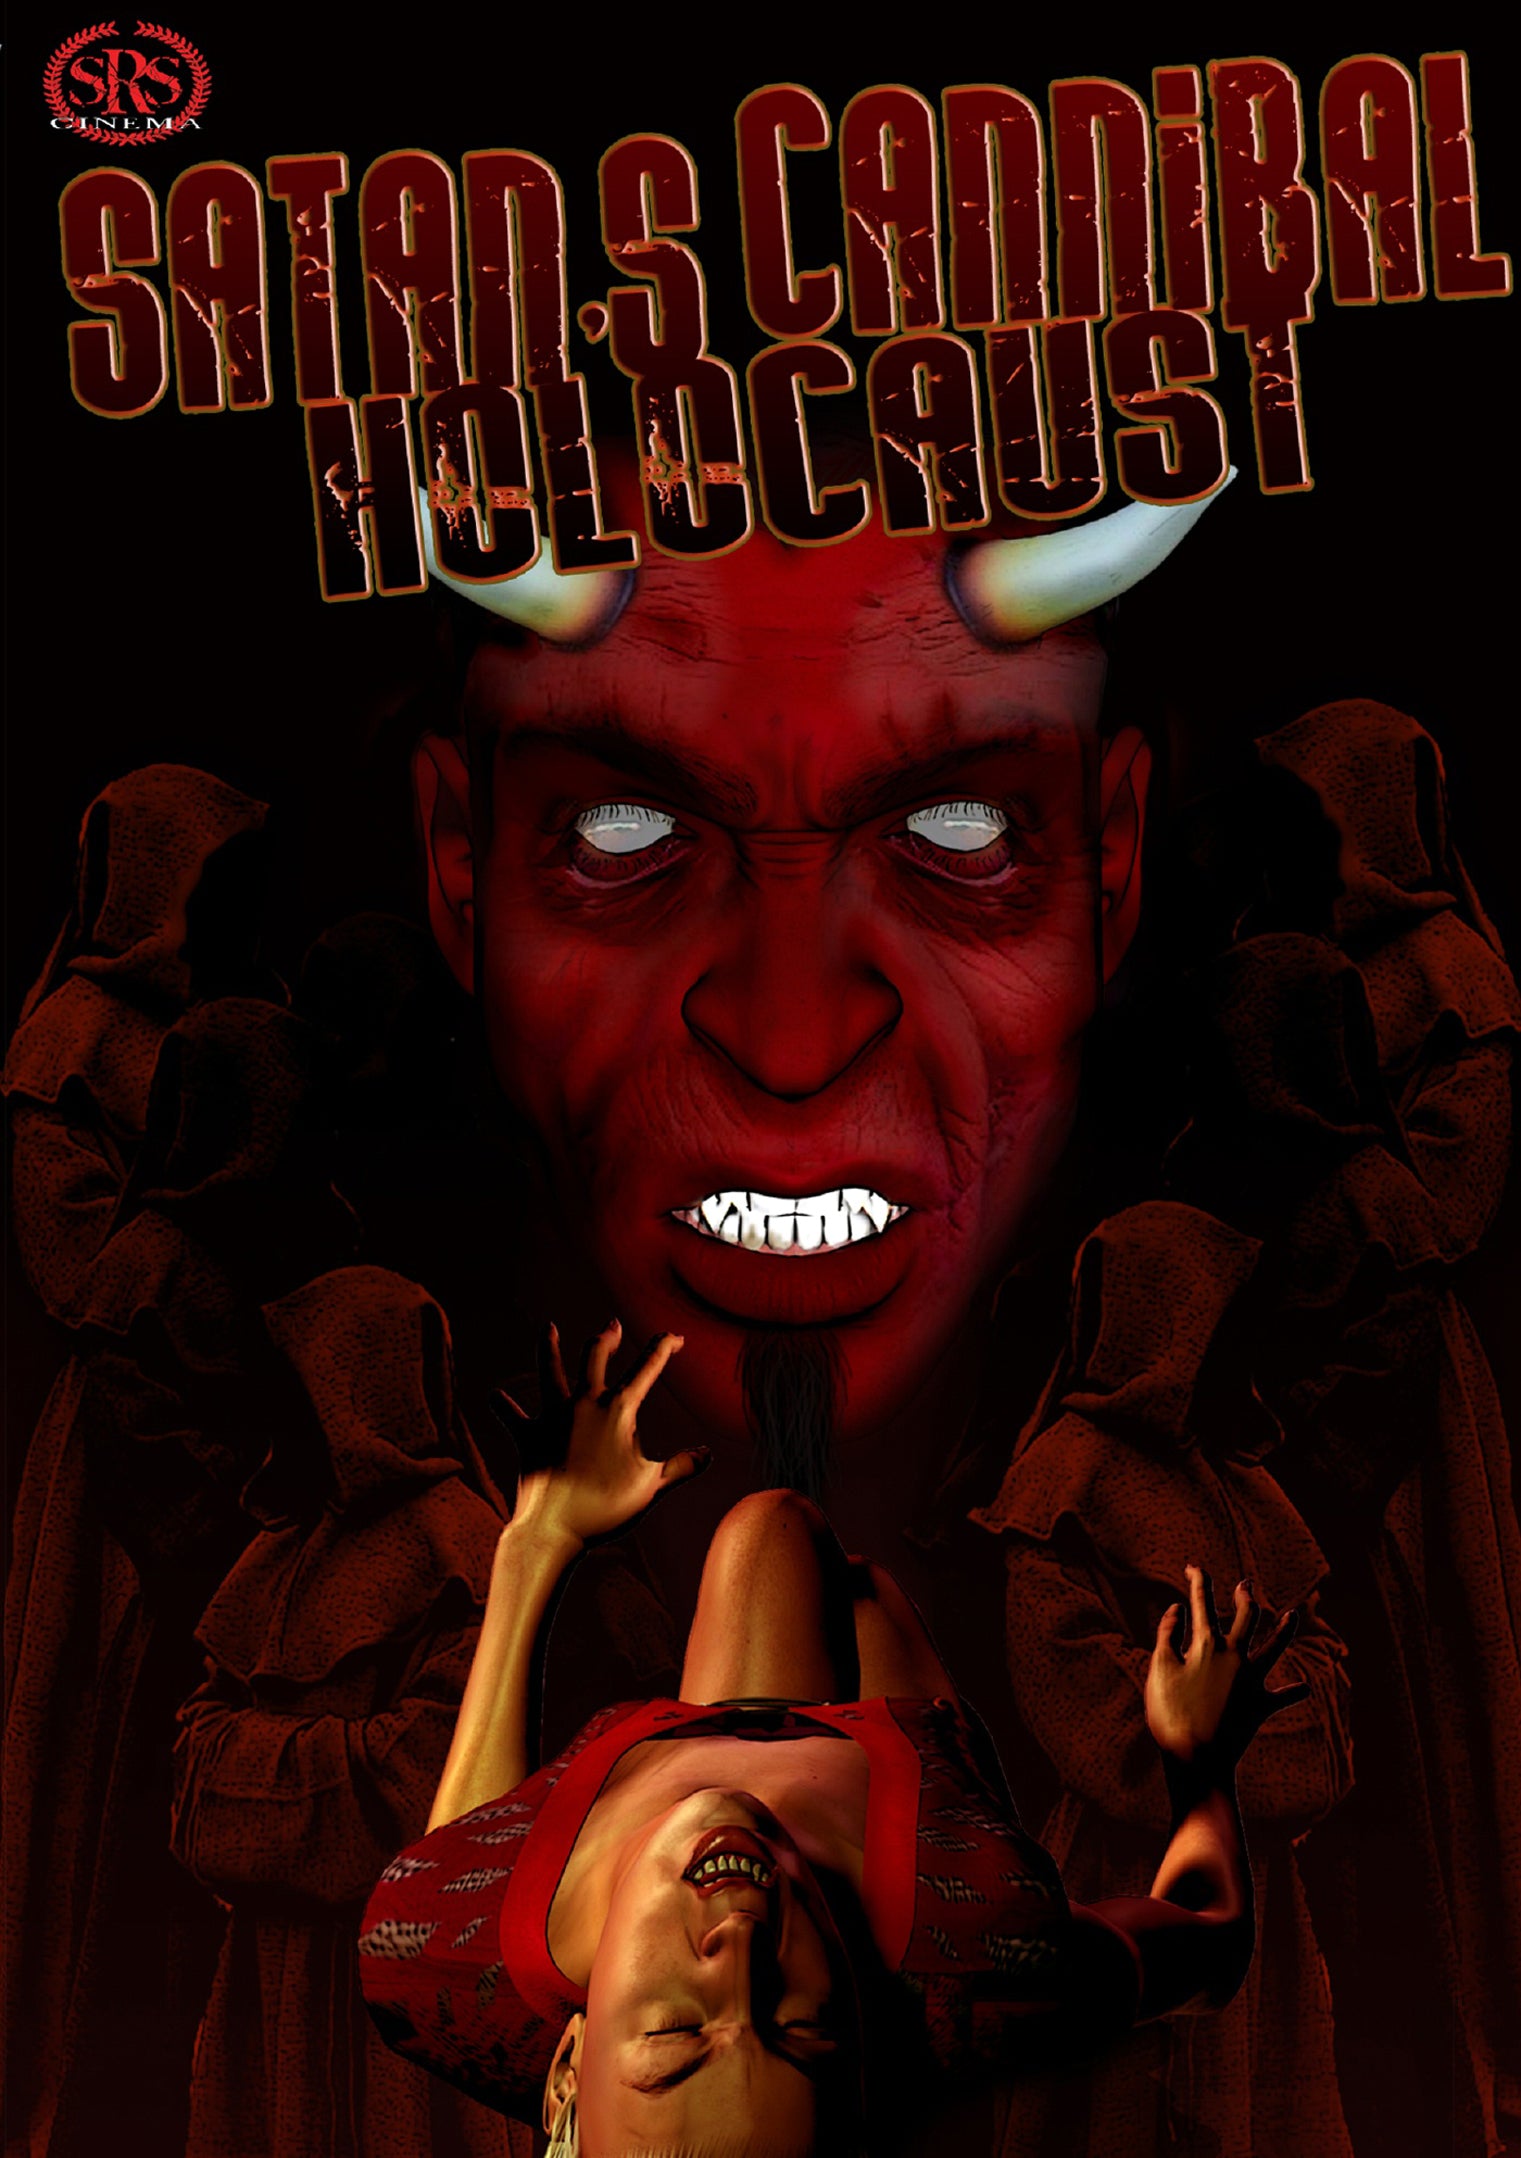 SATAN'S CANNIBAL HOLOCAUST DVD